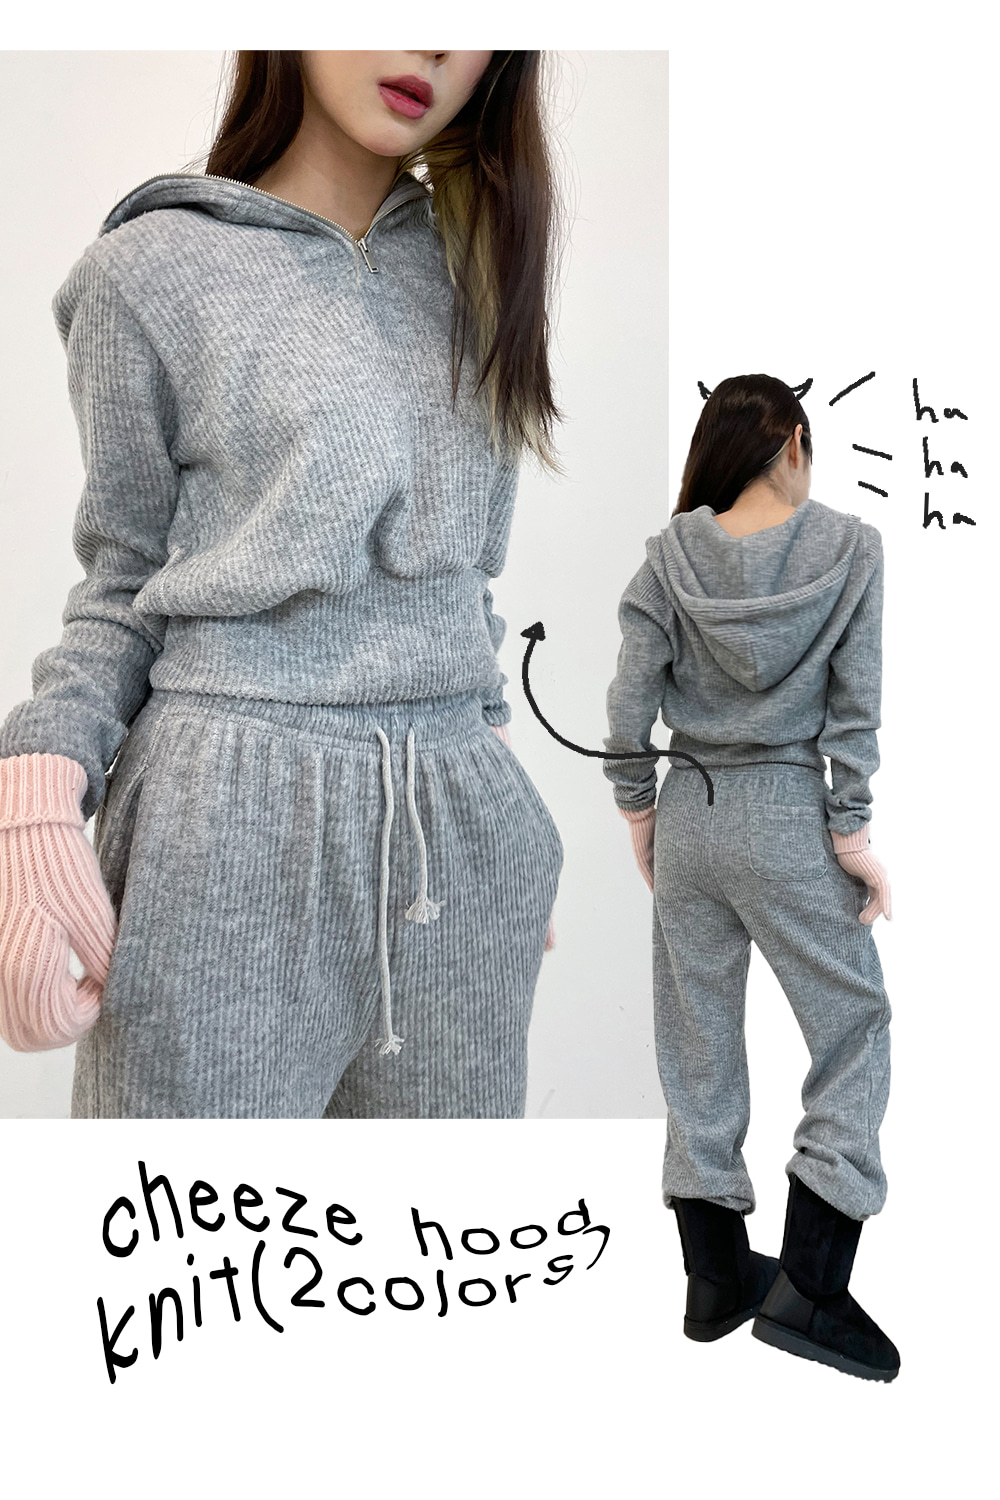 cheeze hood knit (2colors)